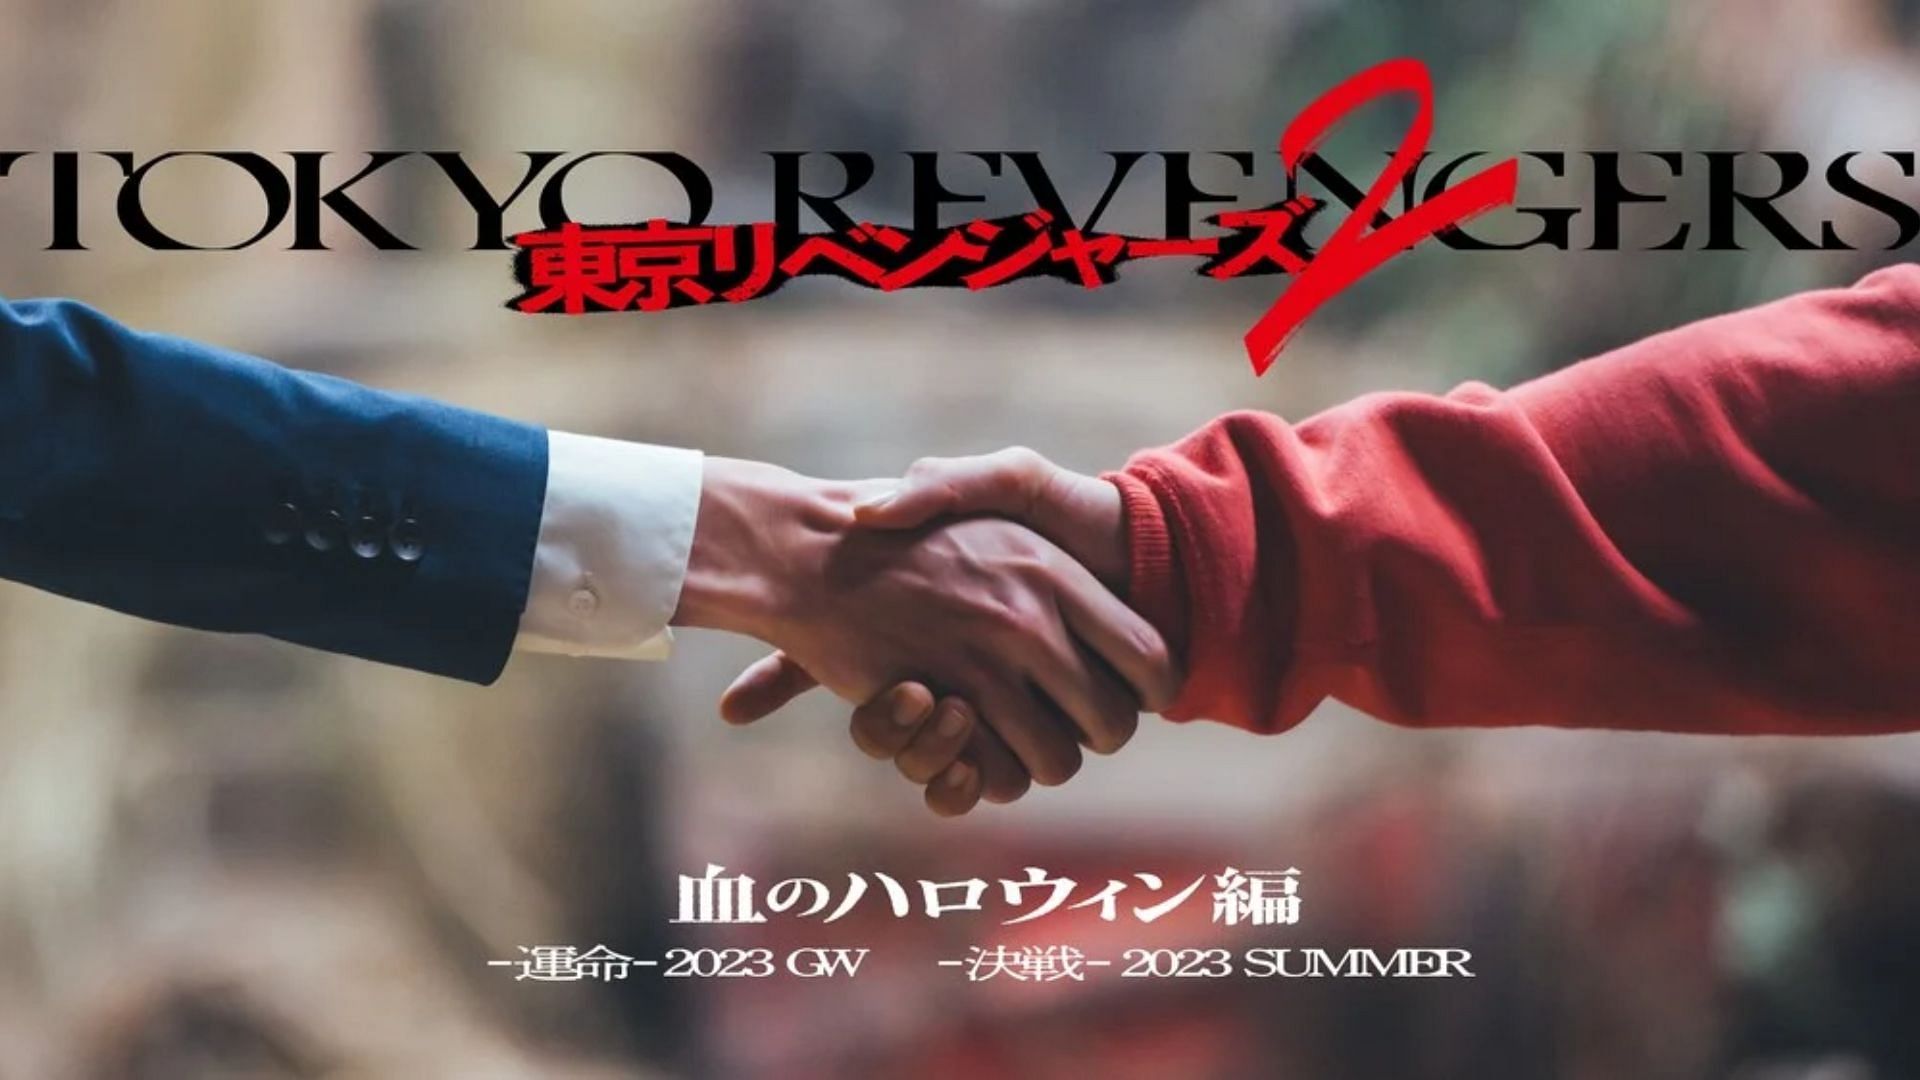 Akkun Fan Casting for Tokyo revengers live action